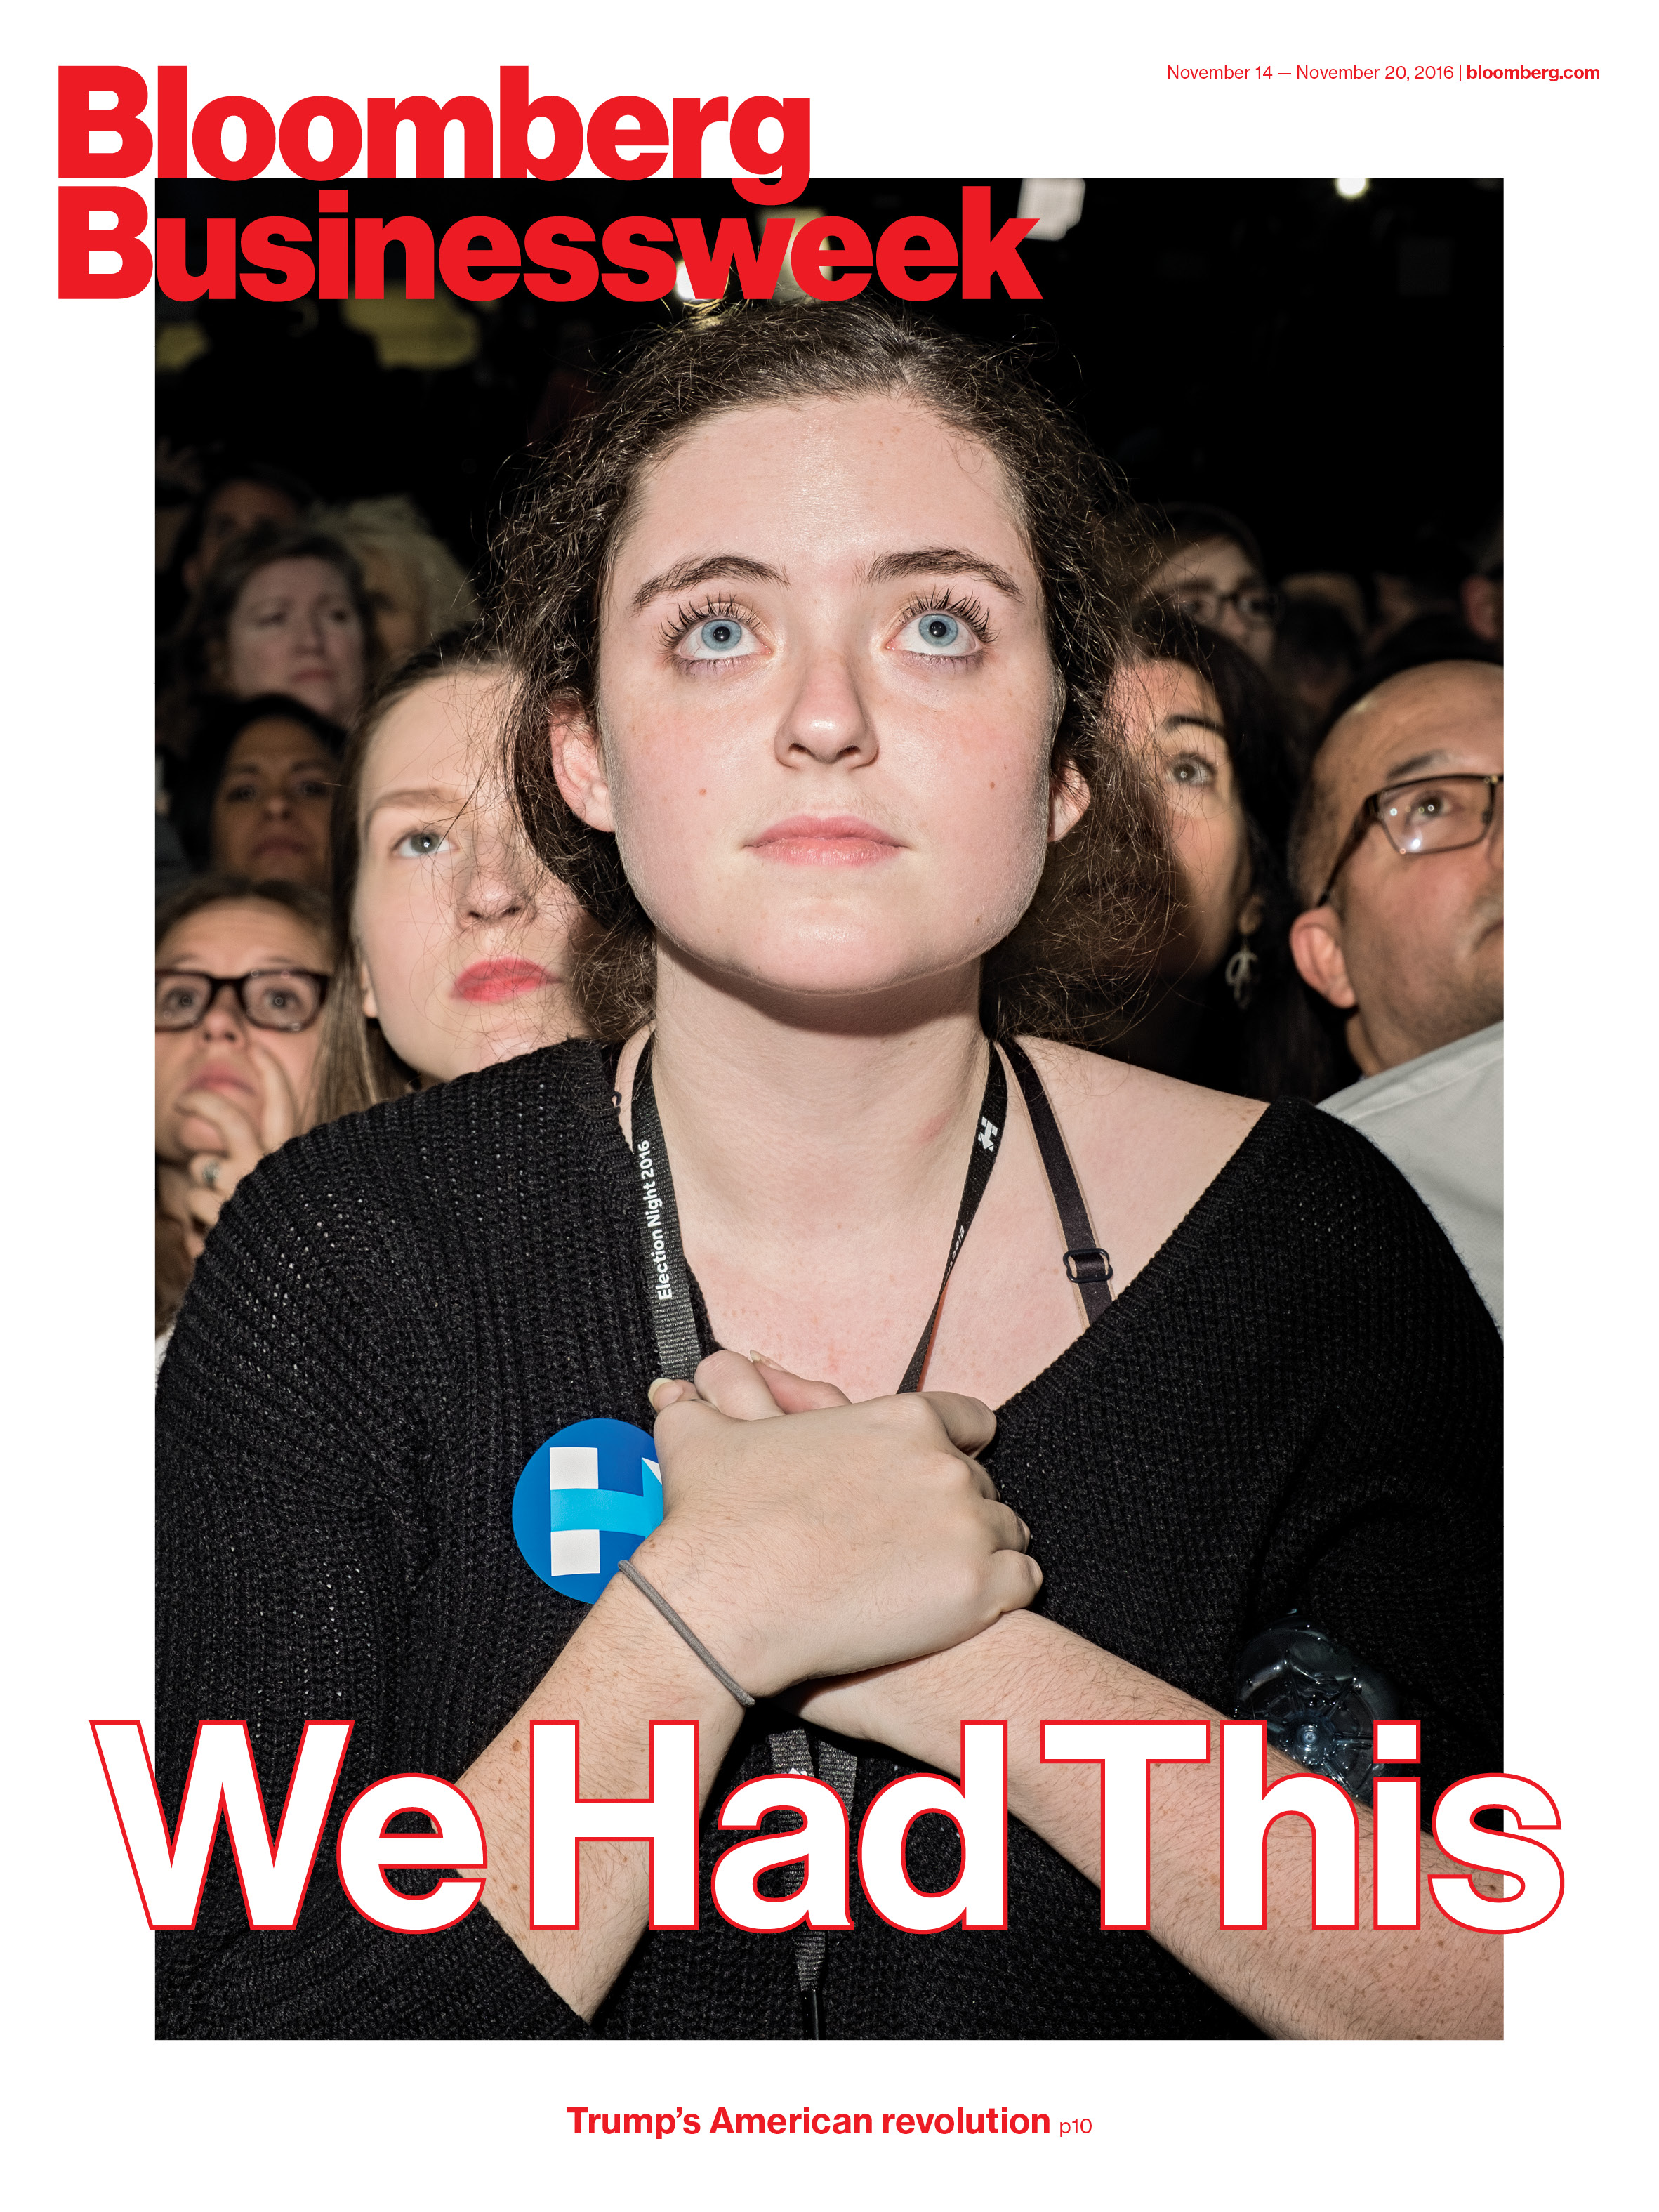 Bloomberg Businessweek - "We Got This. We Had This," November 14-20 split covers